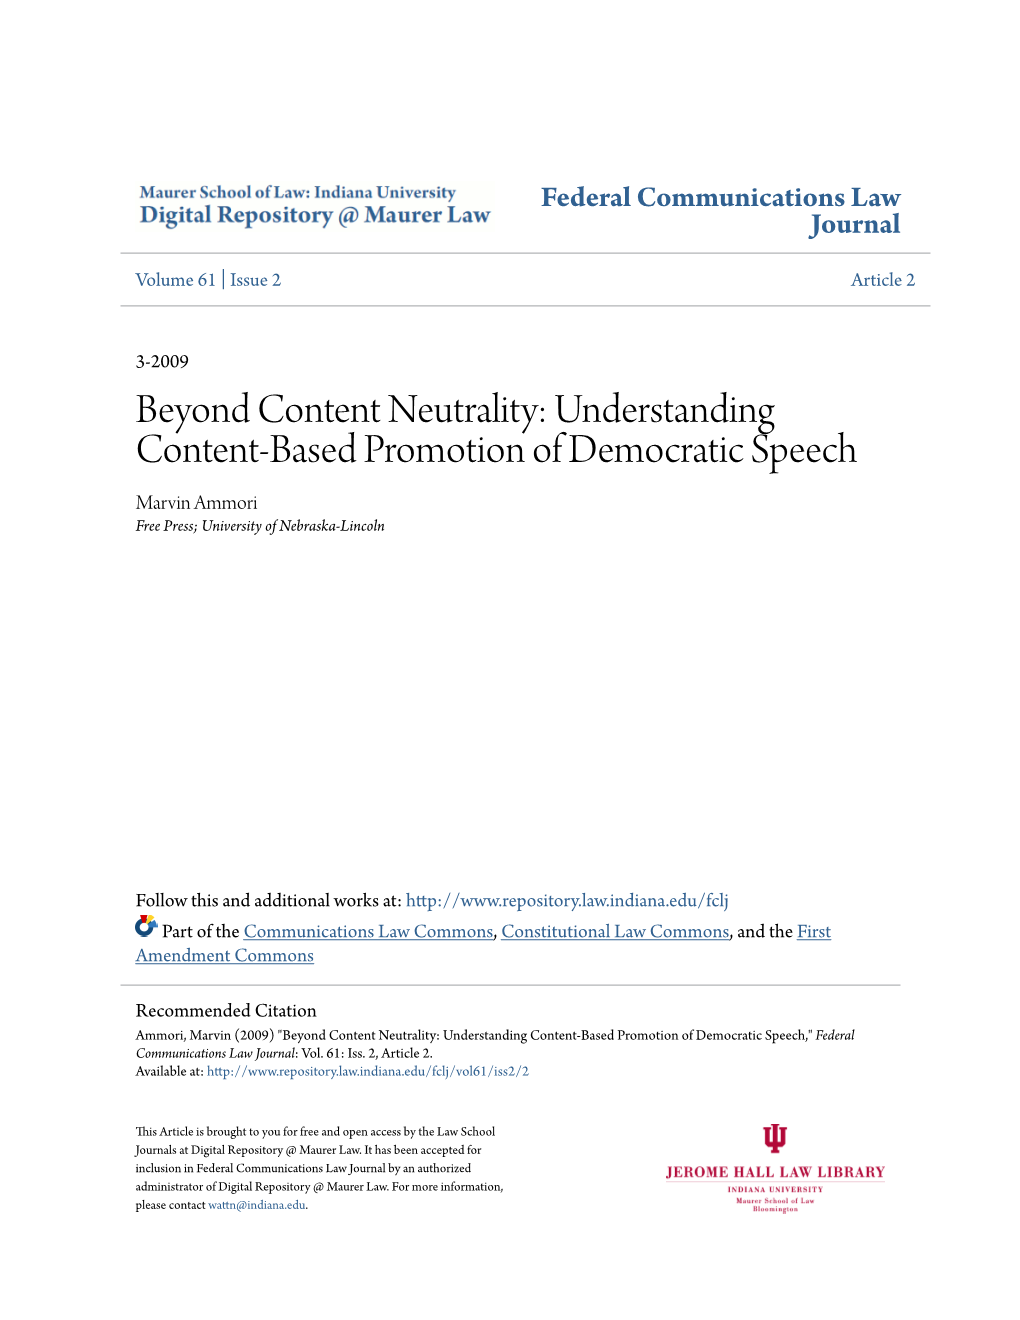 Understanding Content-Based Promotion of Democratic Speech Marvin Ammori Free Press; University of Nebraska-Lincoln